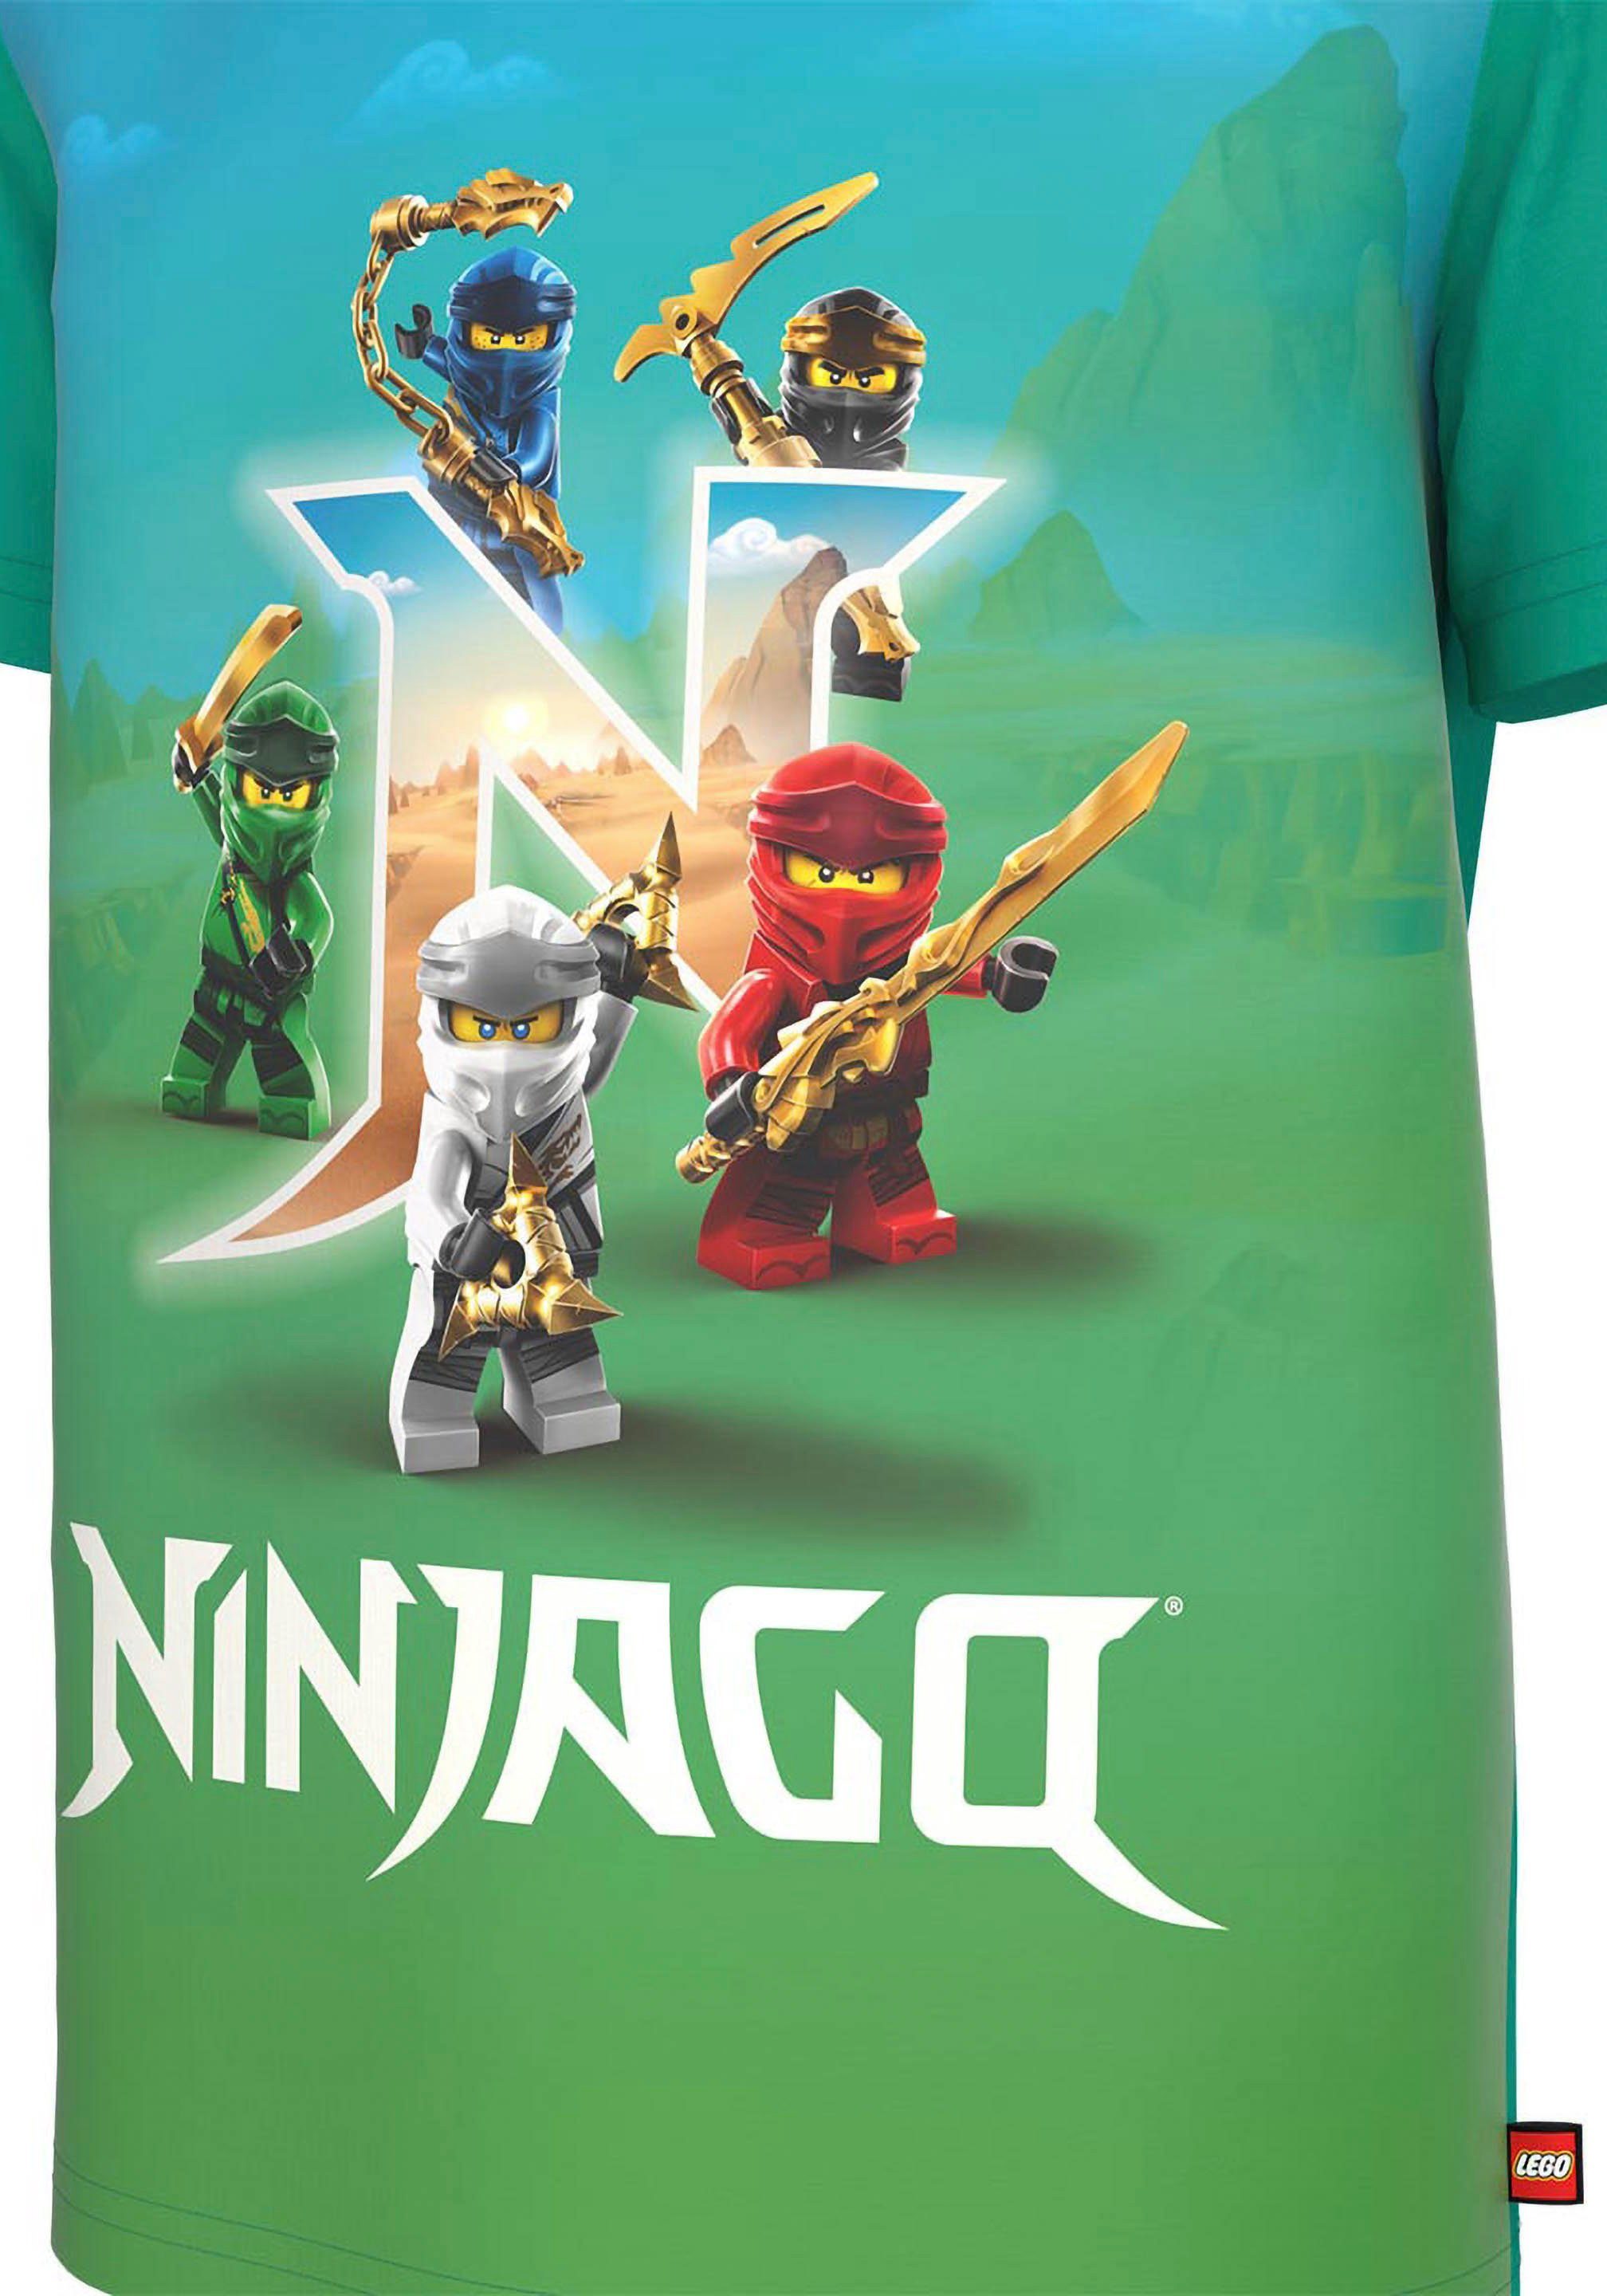 green LEGO® Wear Print-Shirt